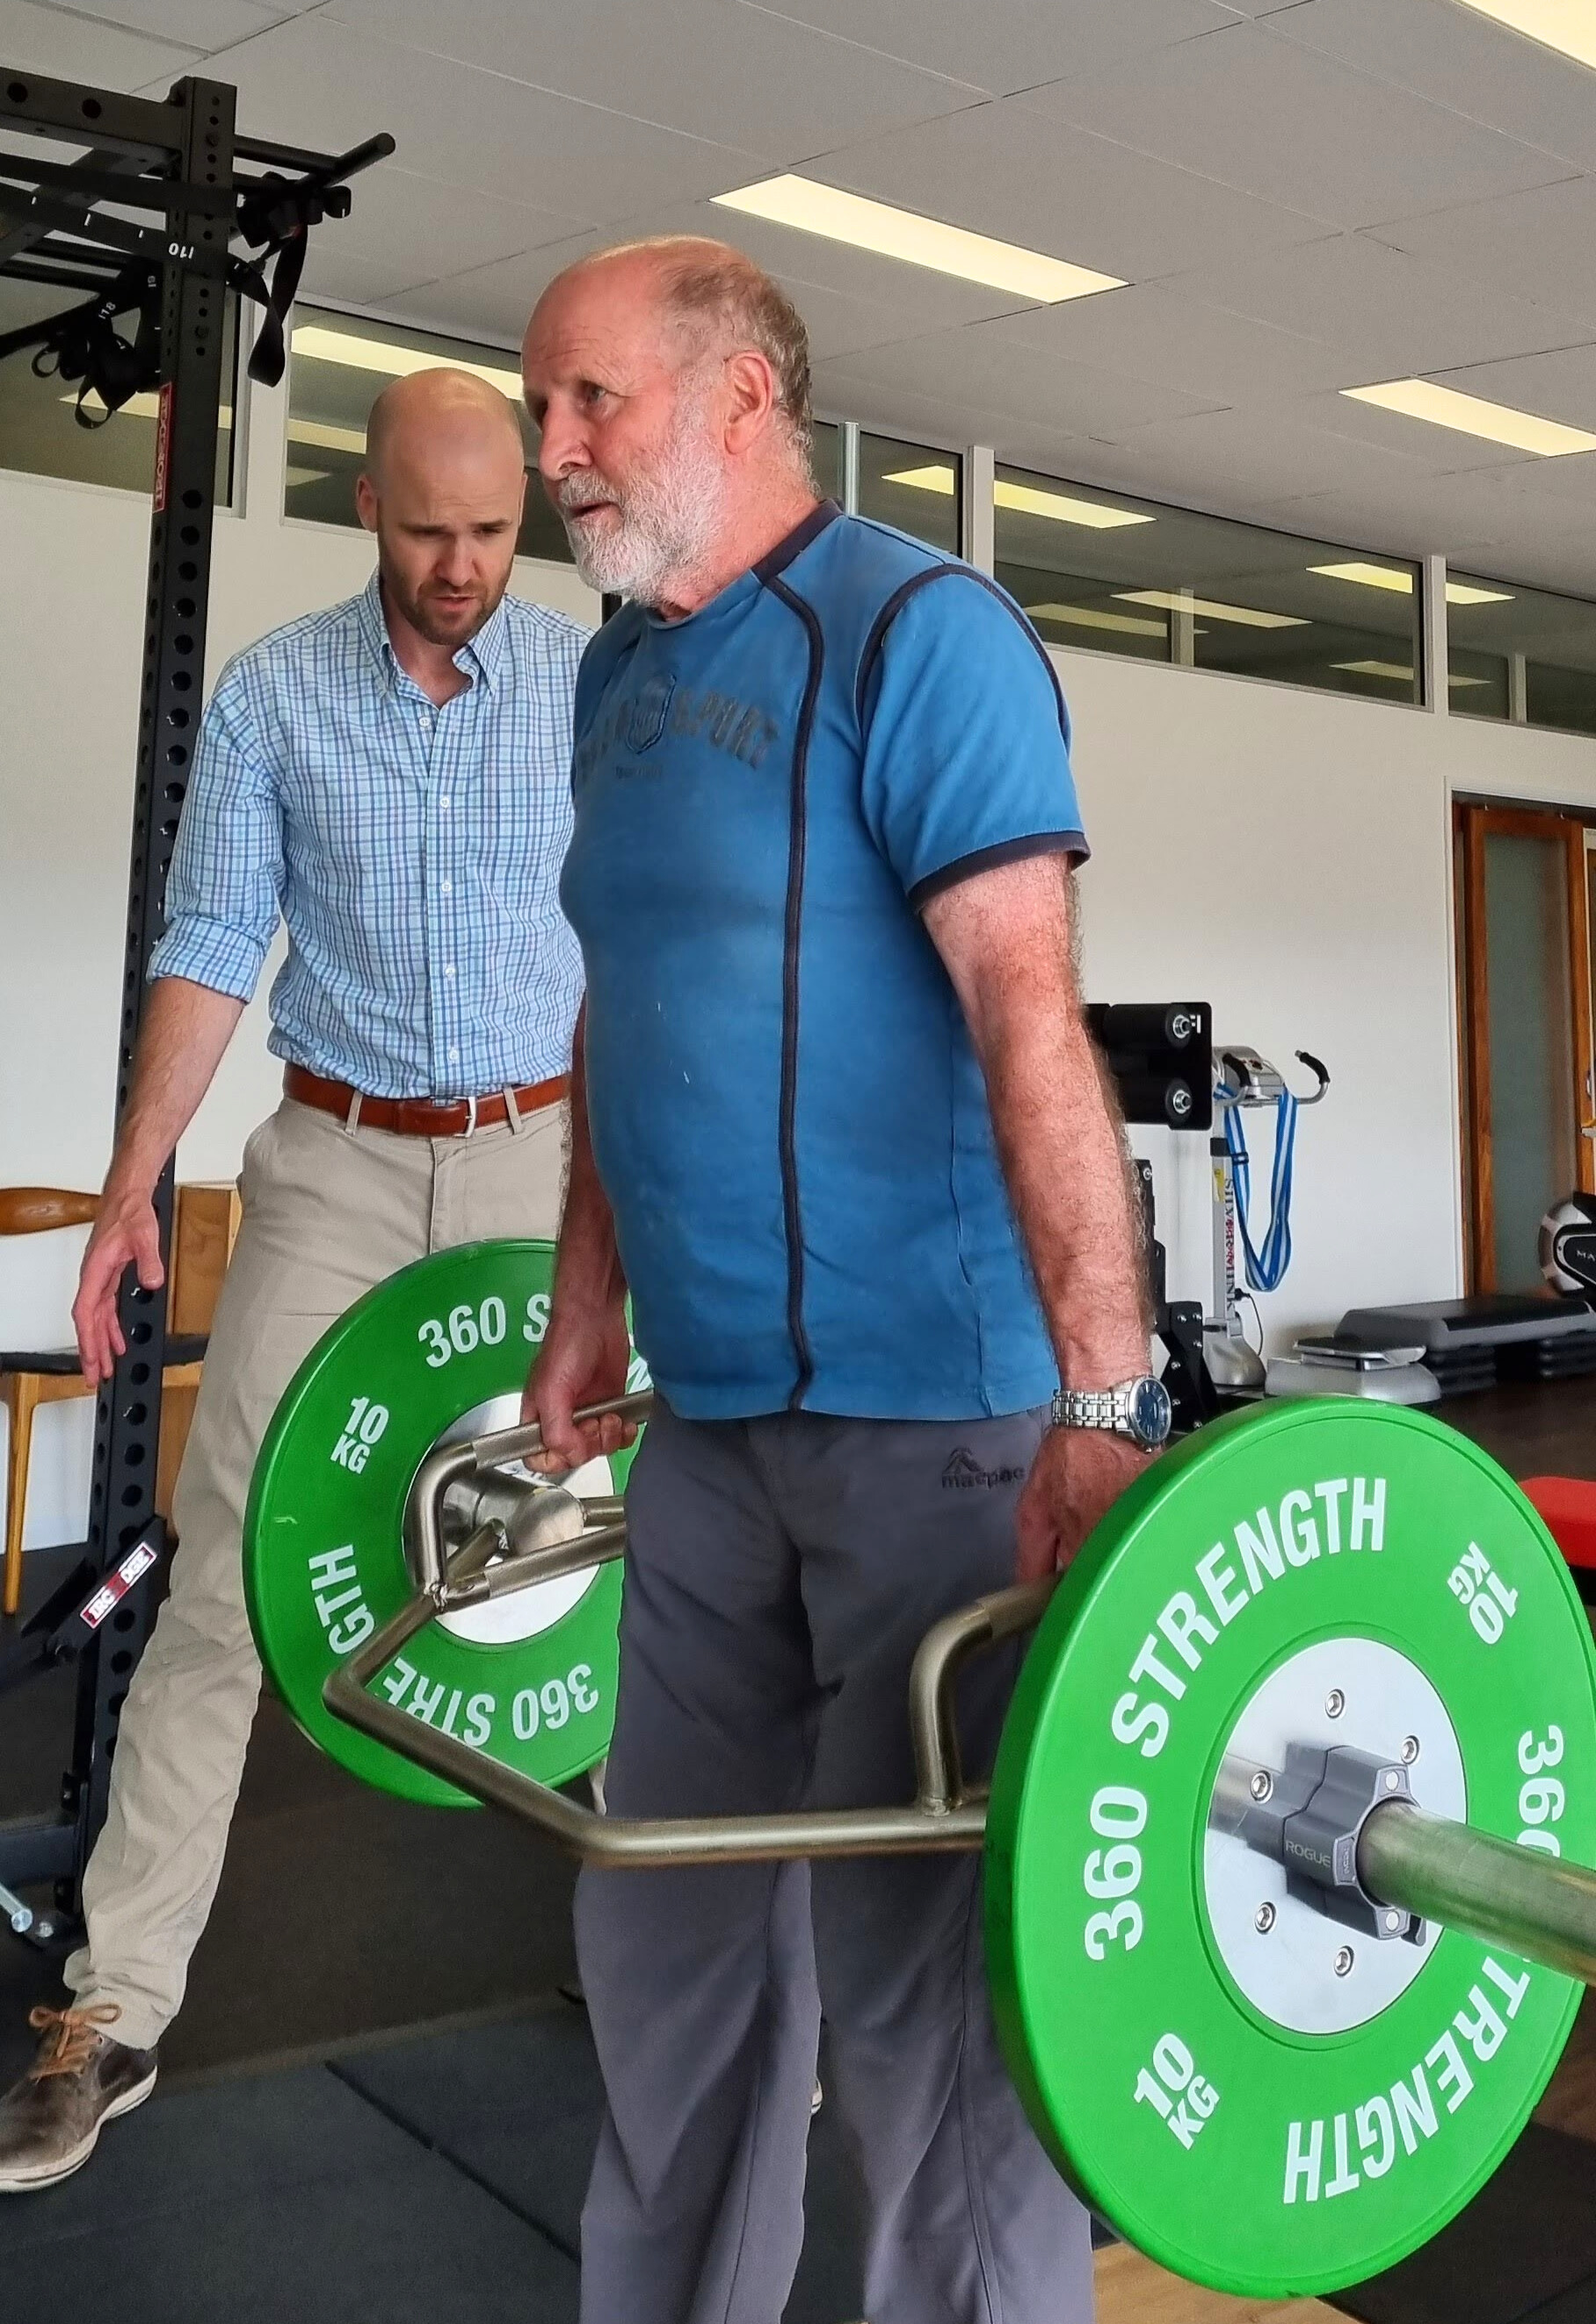 The Wellness Team announces strength training for the elderly